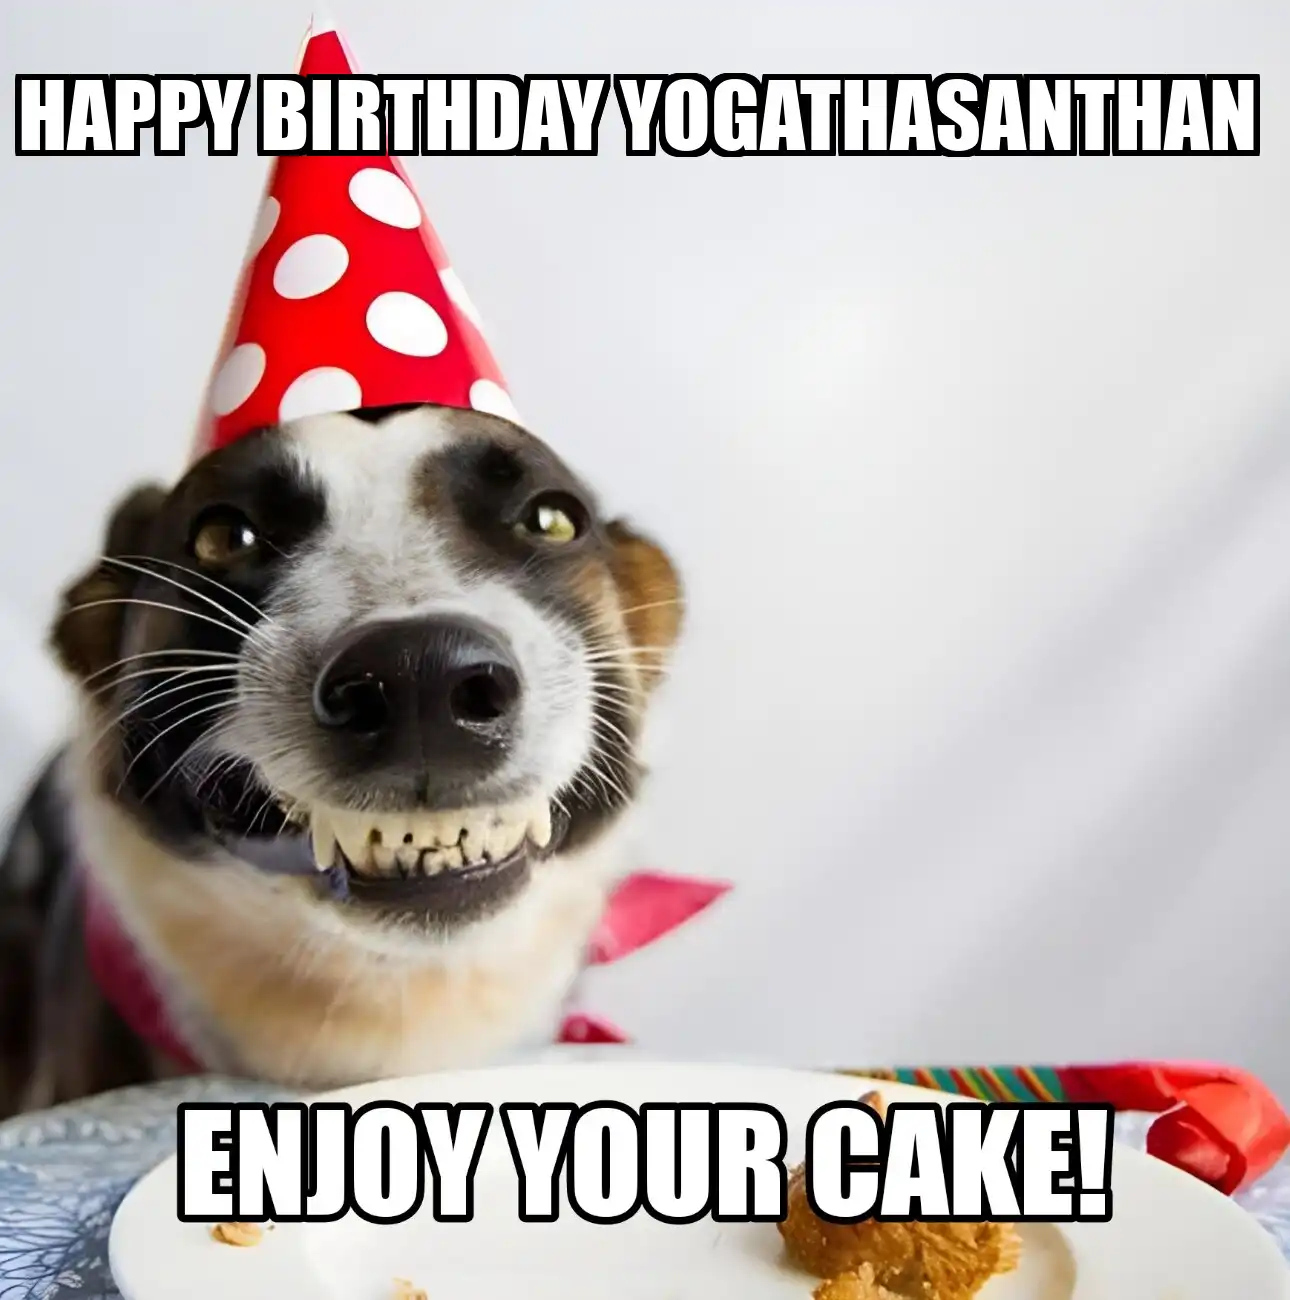 Happy Birthday Yogathasanthan Enjoy Your Cake Dog Meme